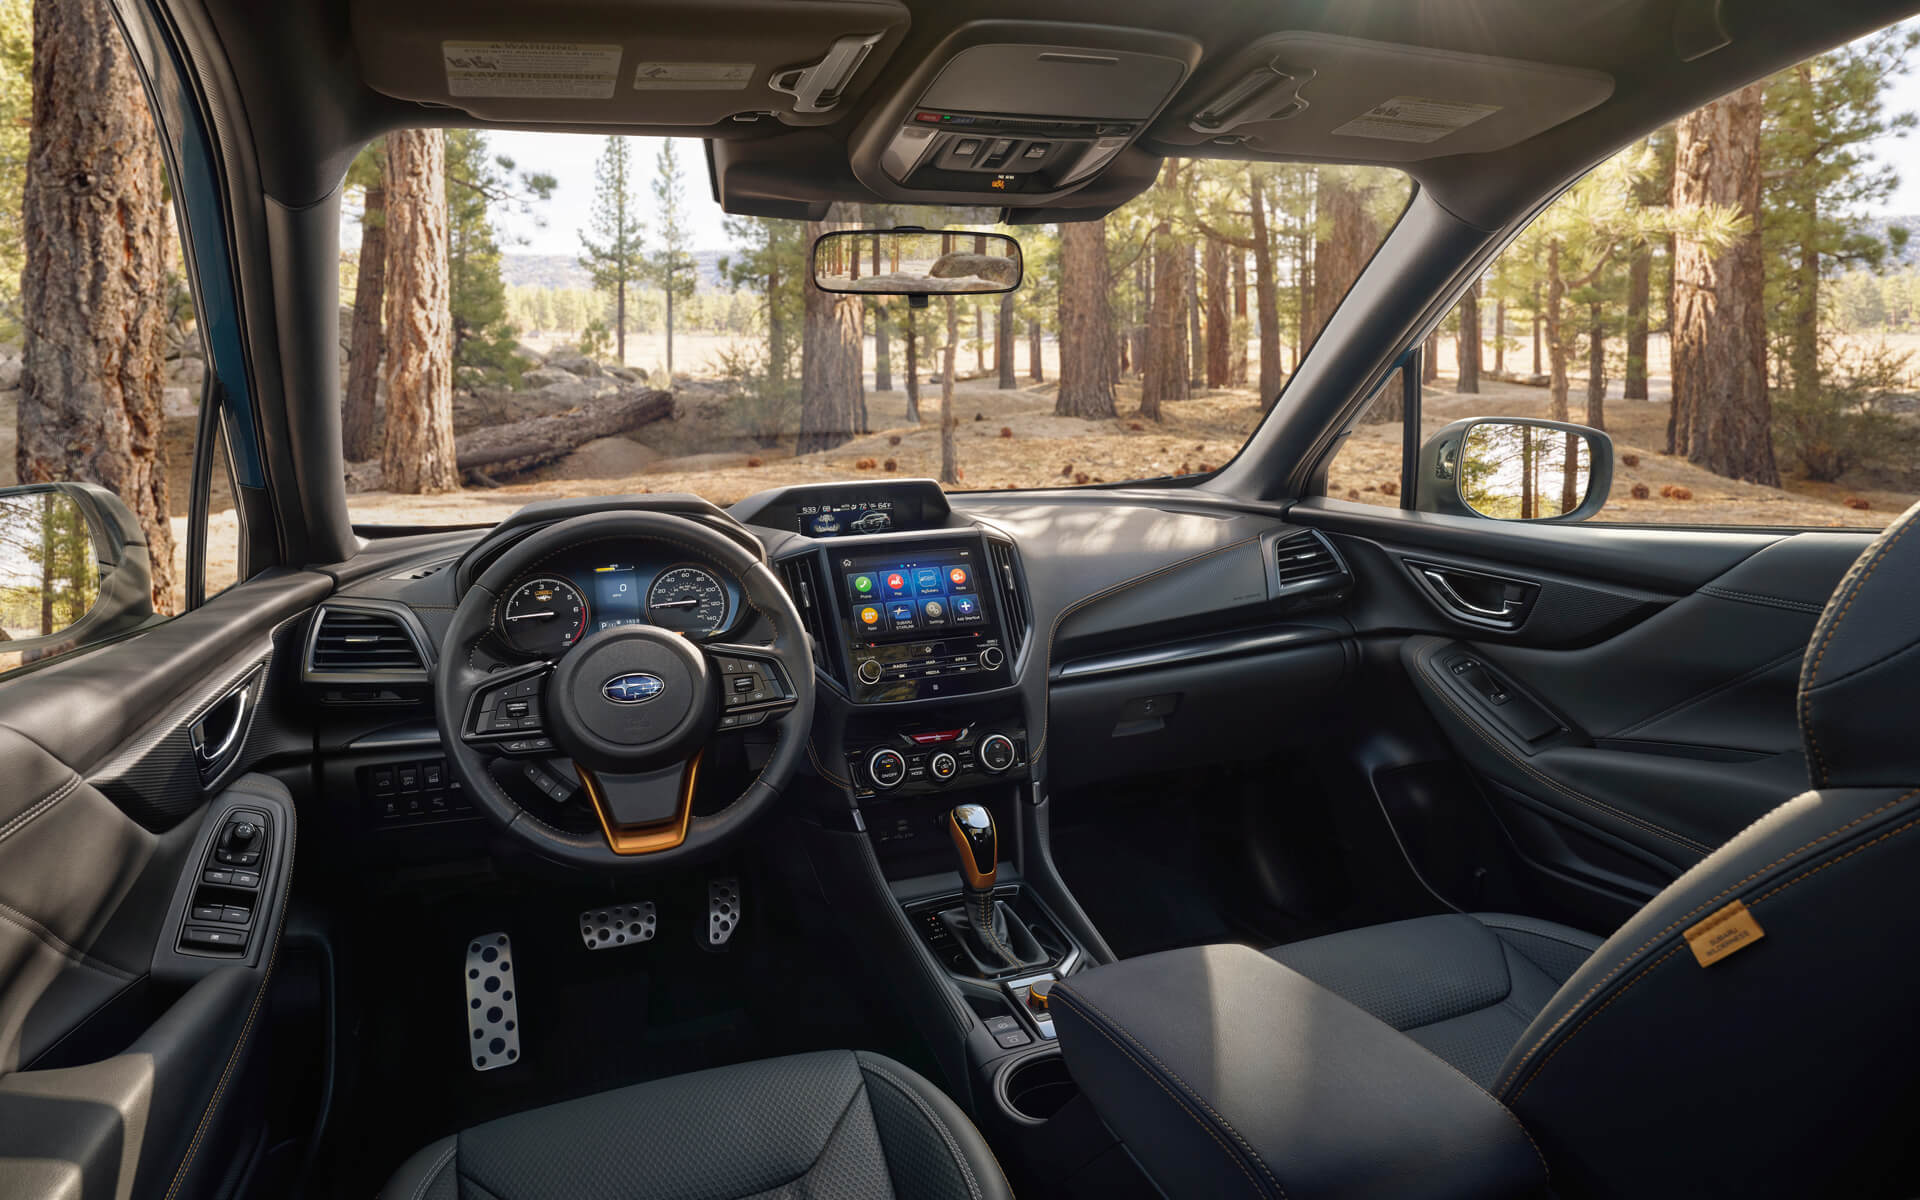 2022 Subaru Forester Wilderness | Vann York Subaru in Asheboro NC